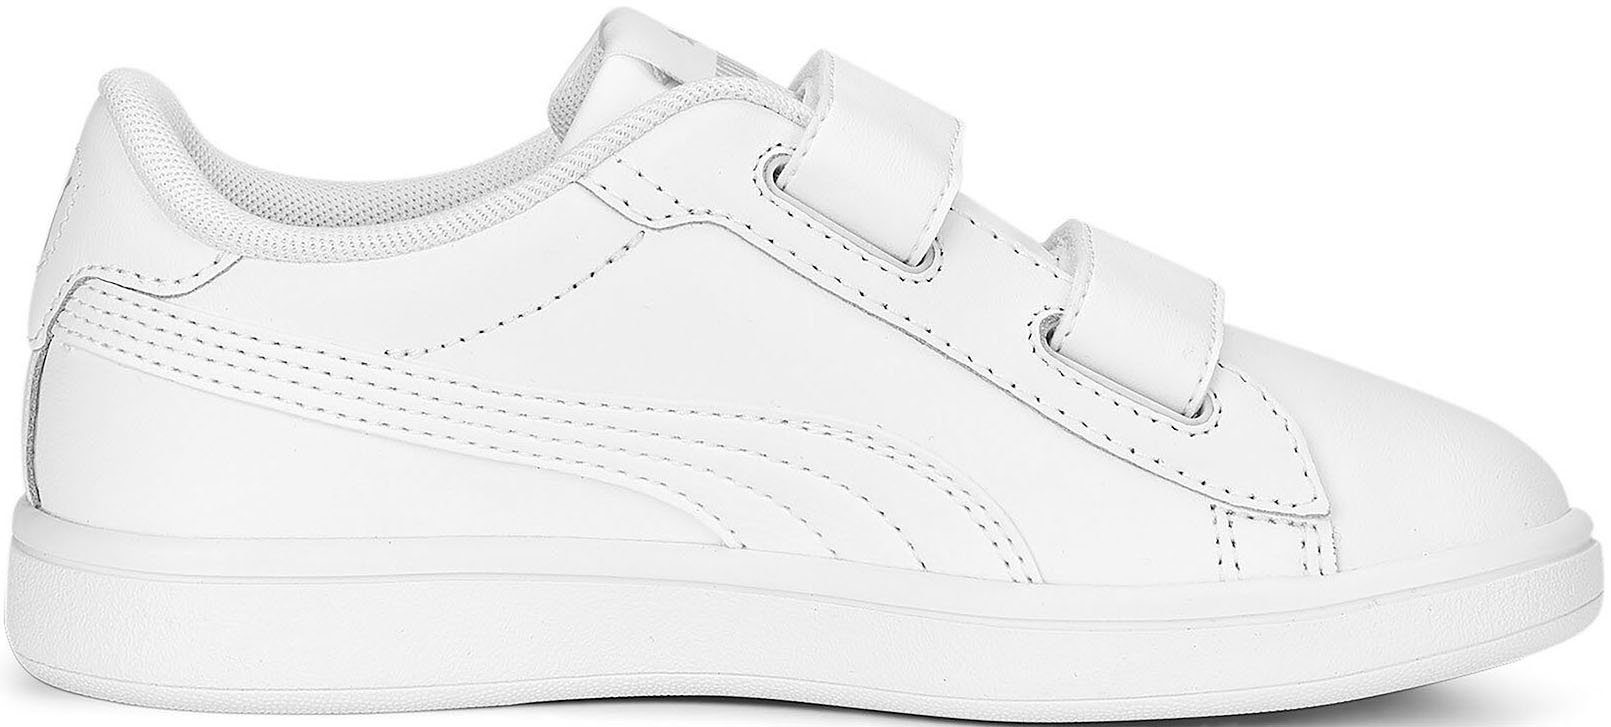 V Klettverschluss L PUMA White-Cool SMASH Light Gray Sneaker PS 3.0 PUMA mit